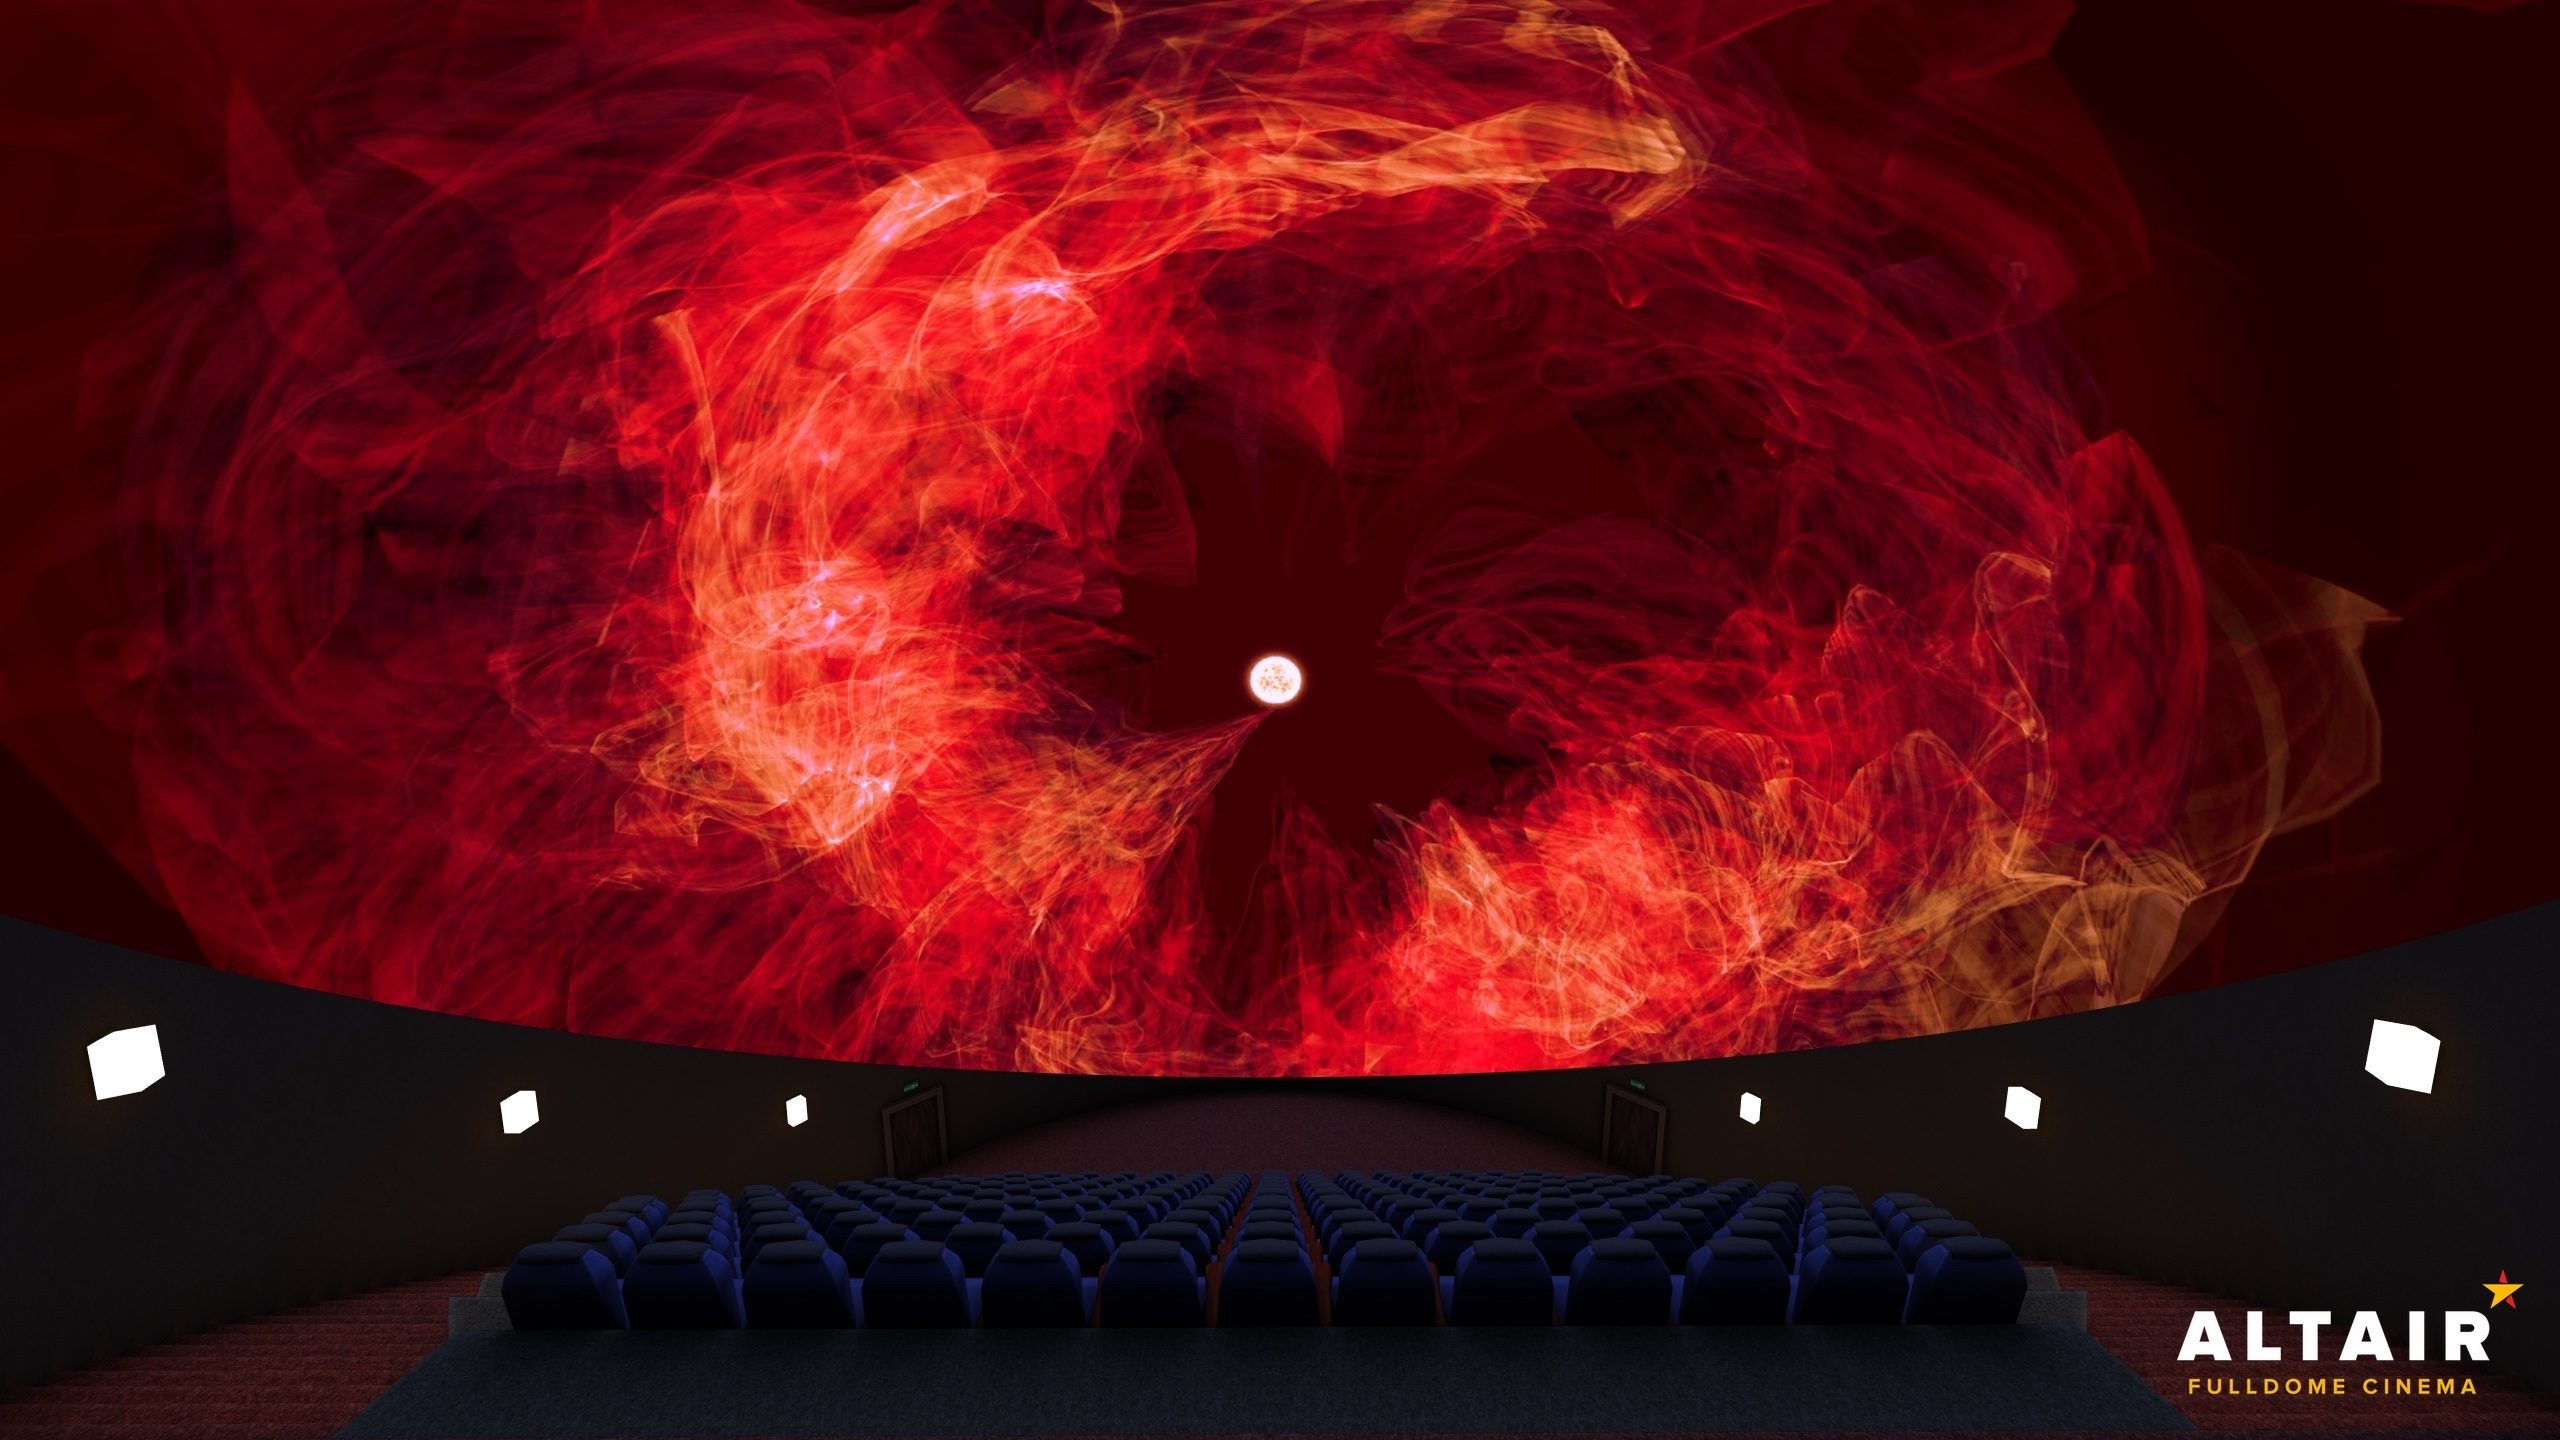 Stereo 3D for a Planetarium